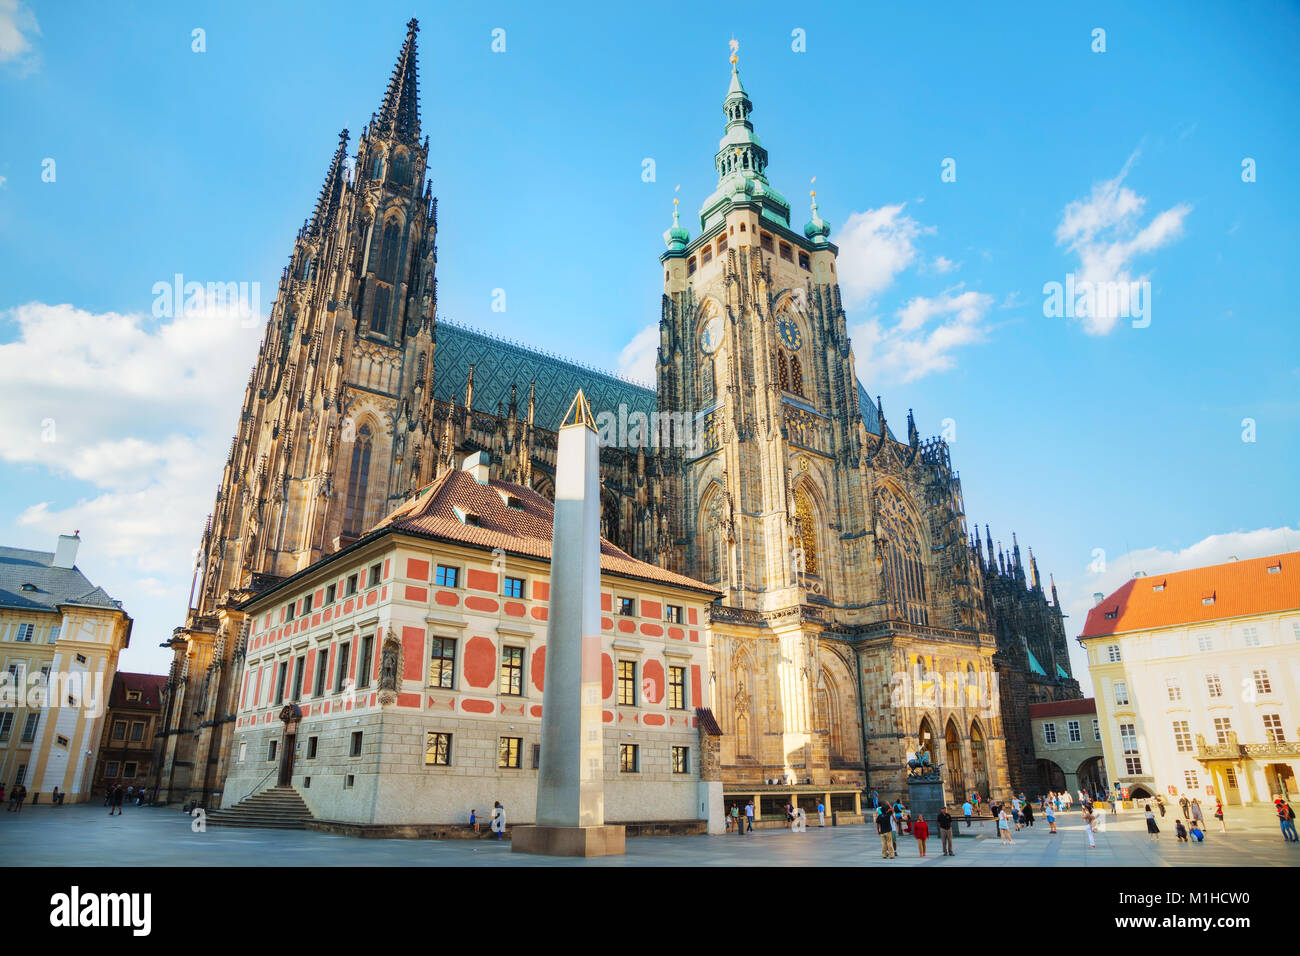 PRAGUE, CZECH REPUBLIC - AUGUST 28: Saint Vitus cathedral with tourists on August 28, 2017 in Prague, Czech Republic. Stock Photo